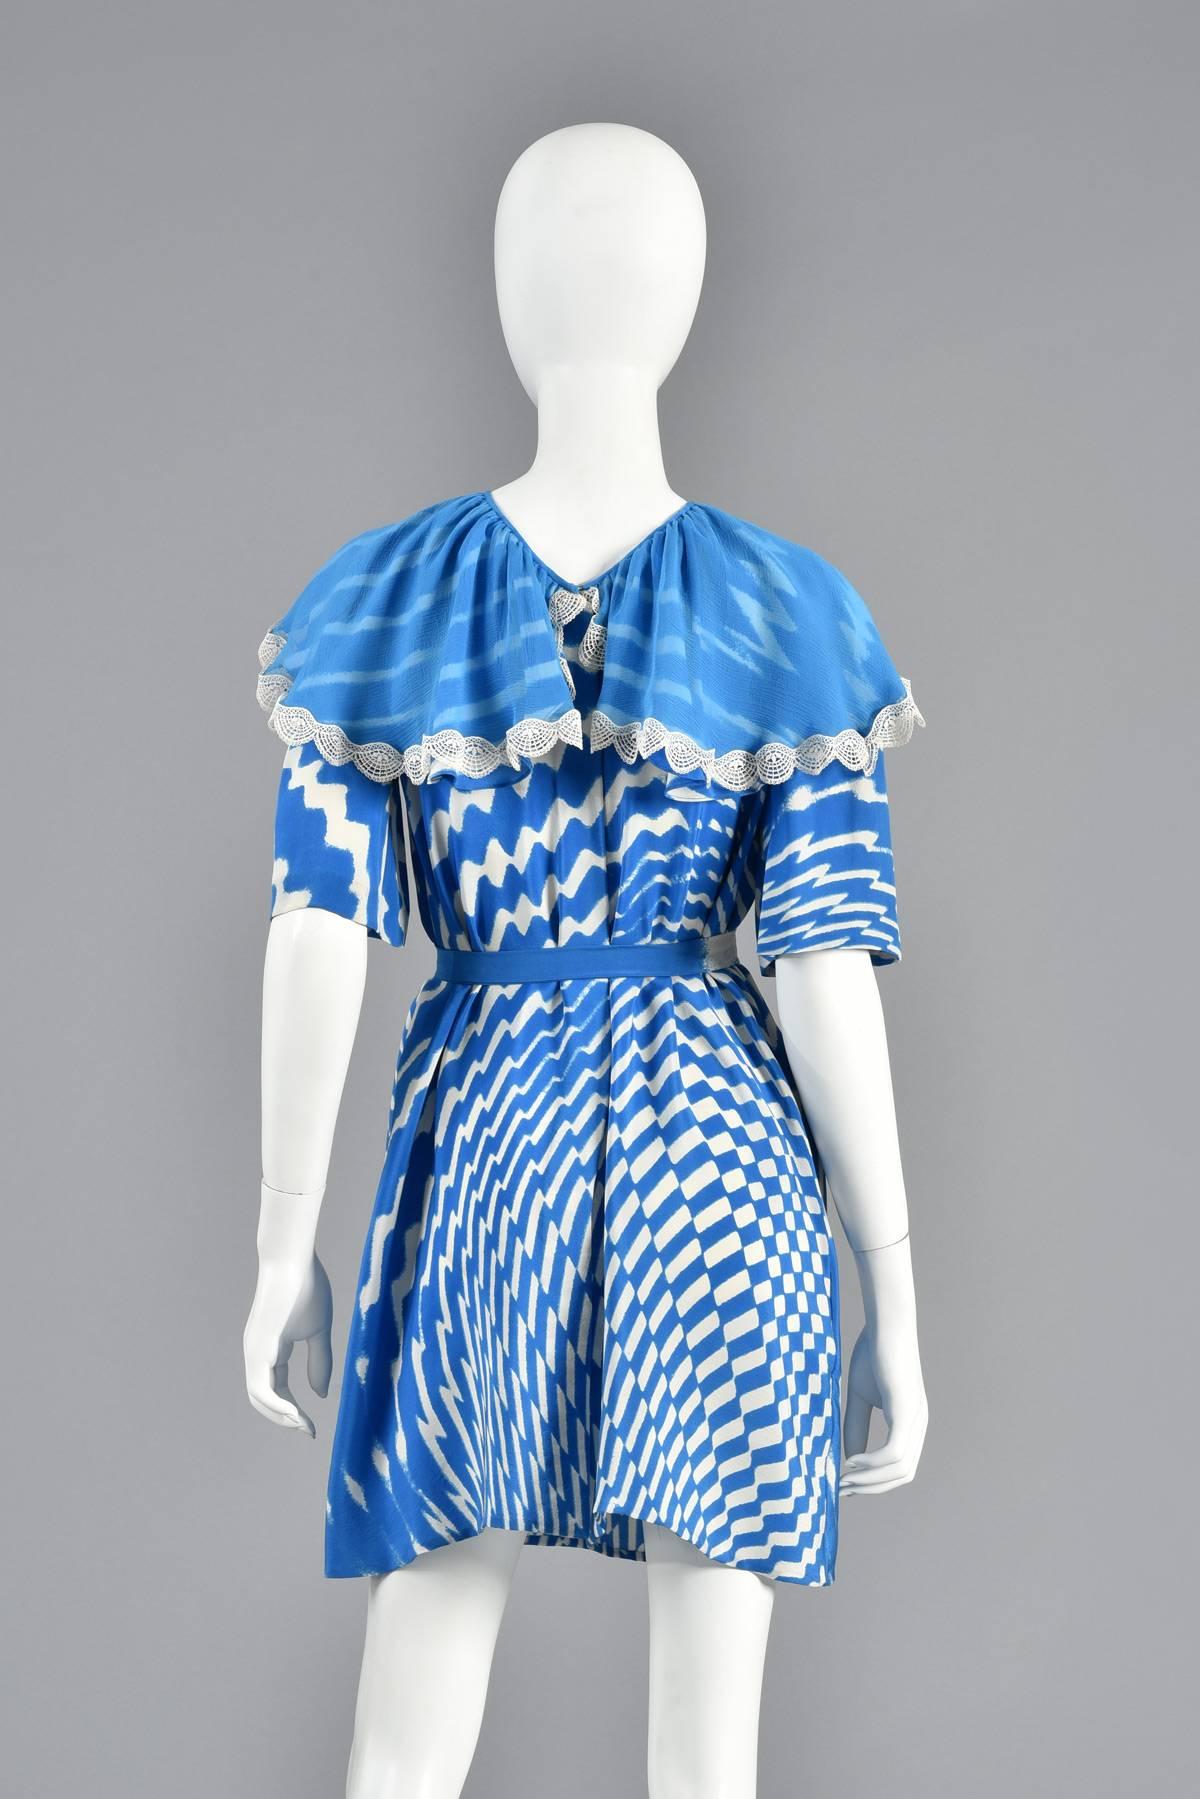 Thea Porter Couture Op Art Mini Dress For Sale 4